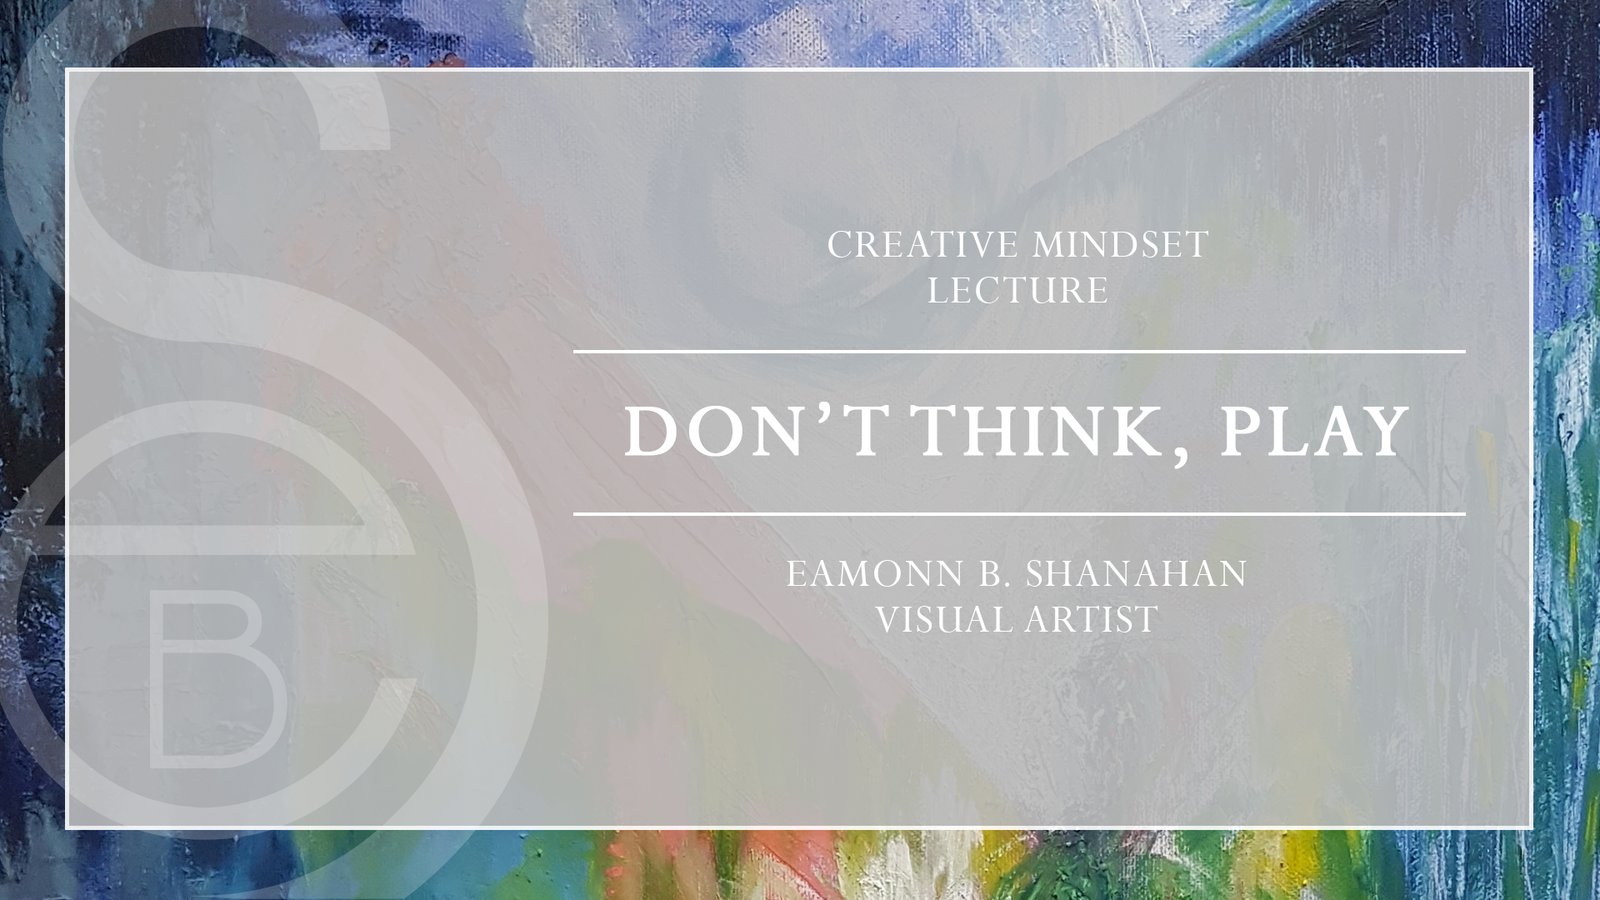 Don't Think, Play! A New Workshop by Eamonn B. Shanahan